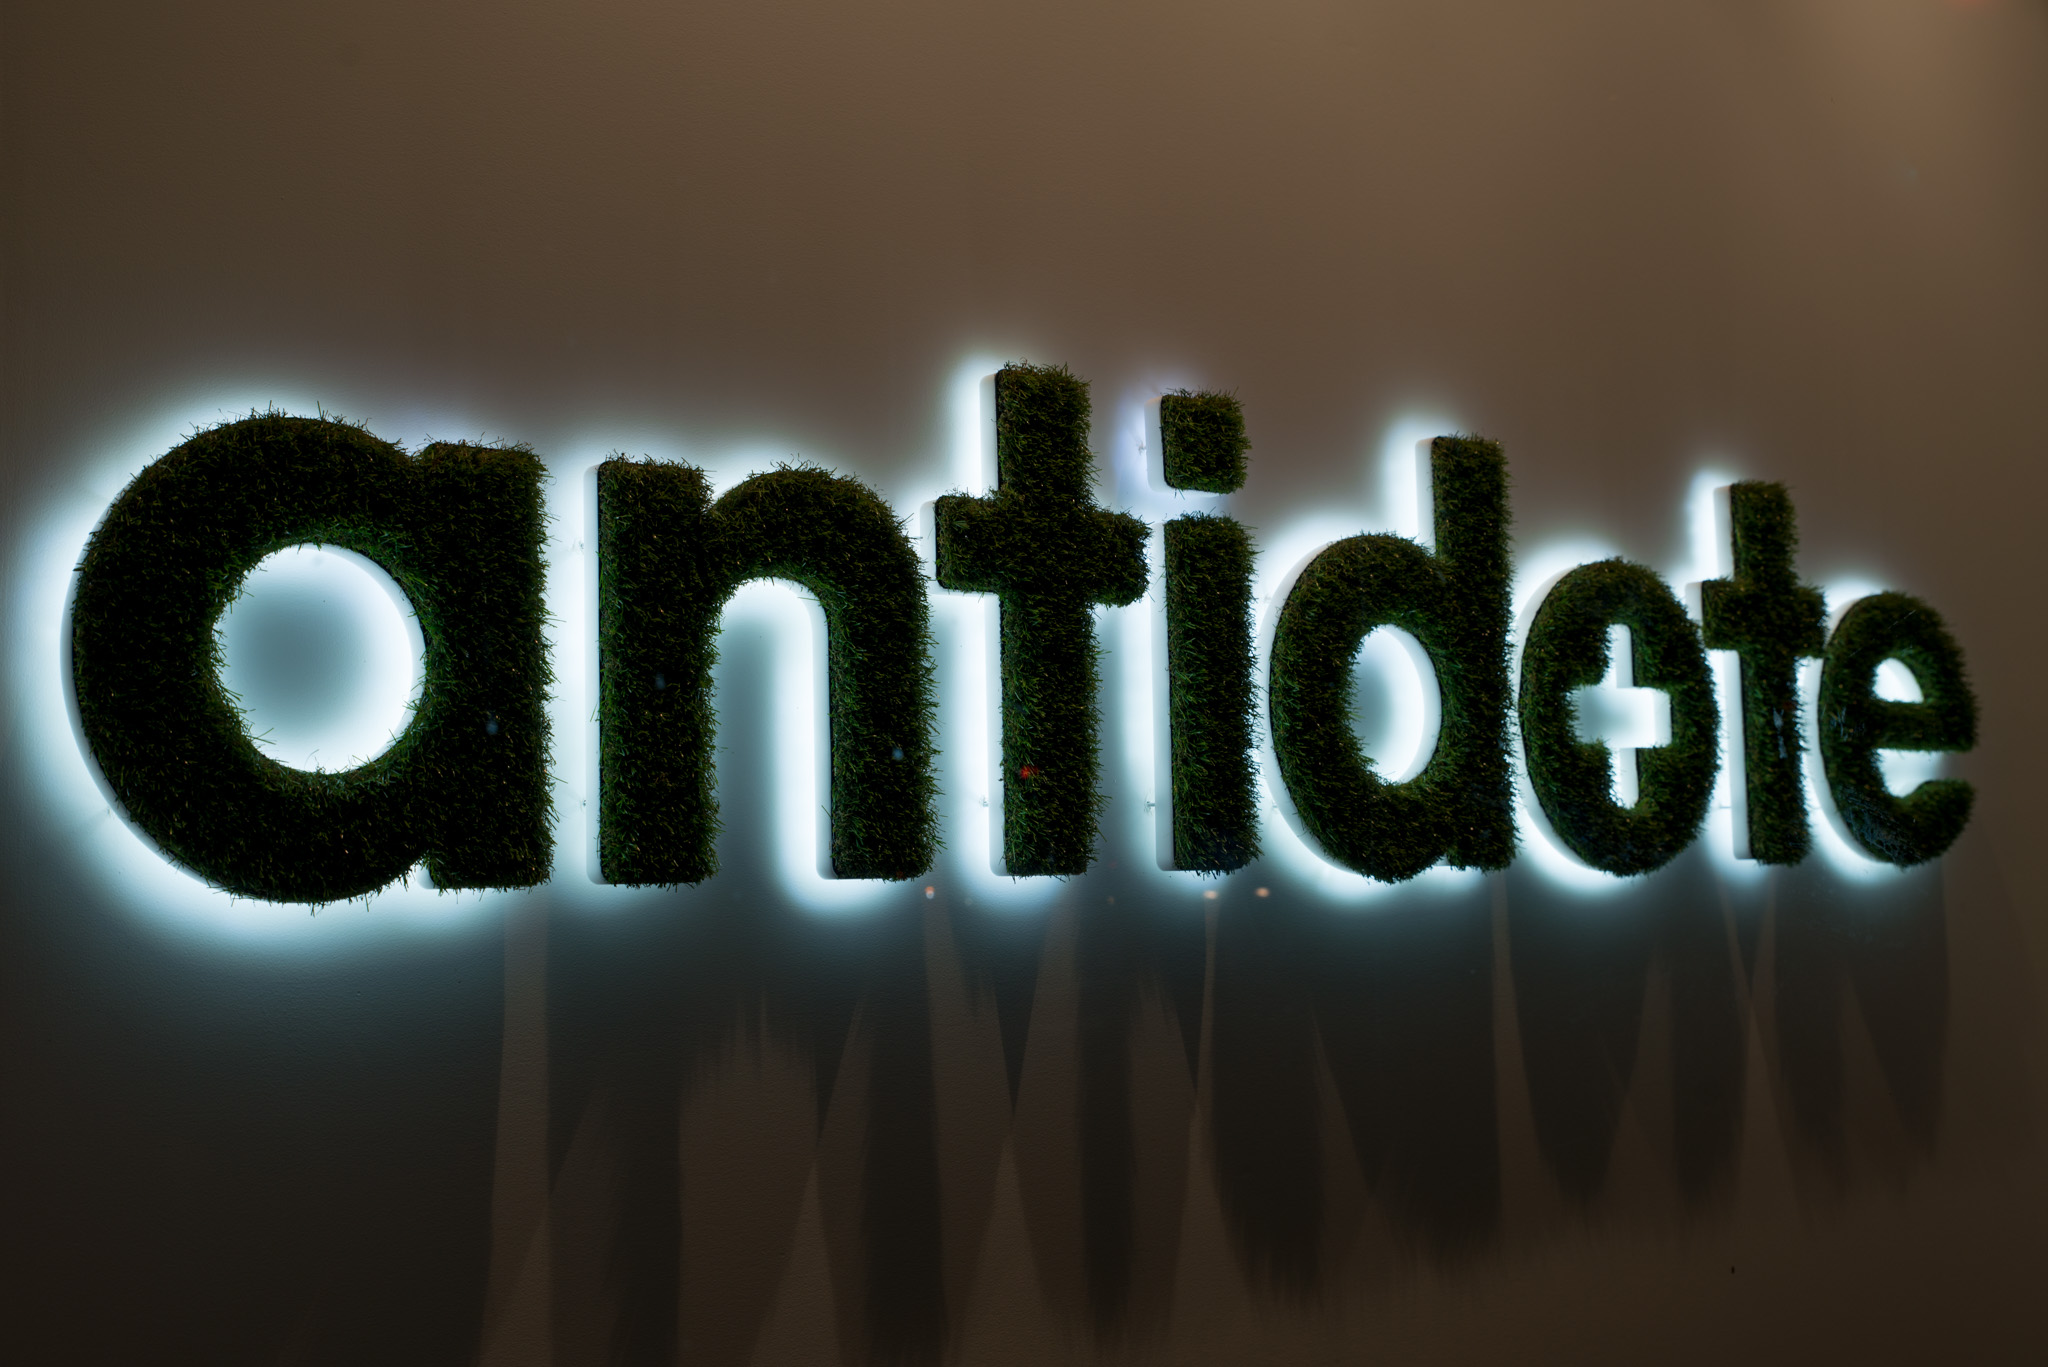 Gardens Antidote illuminated sign NZSDA award winner thumbnail